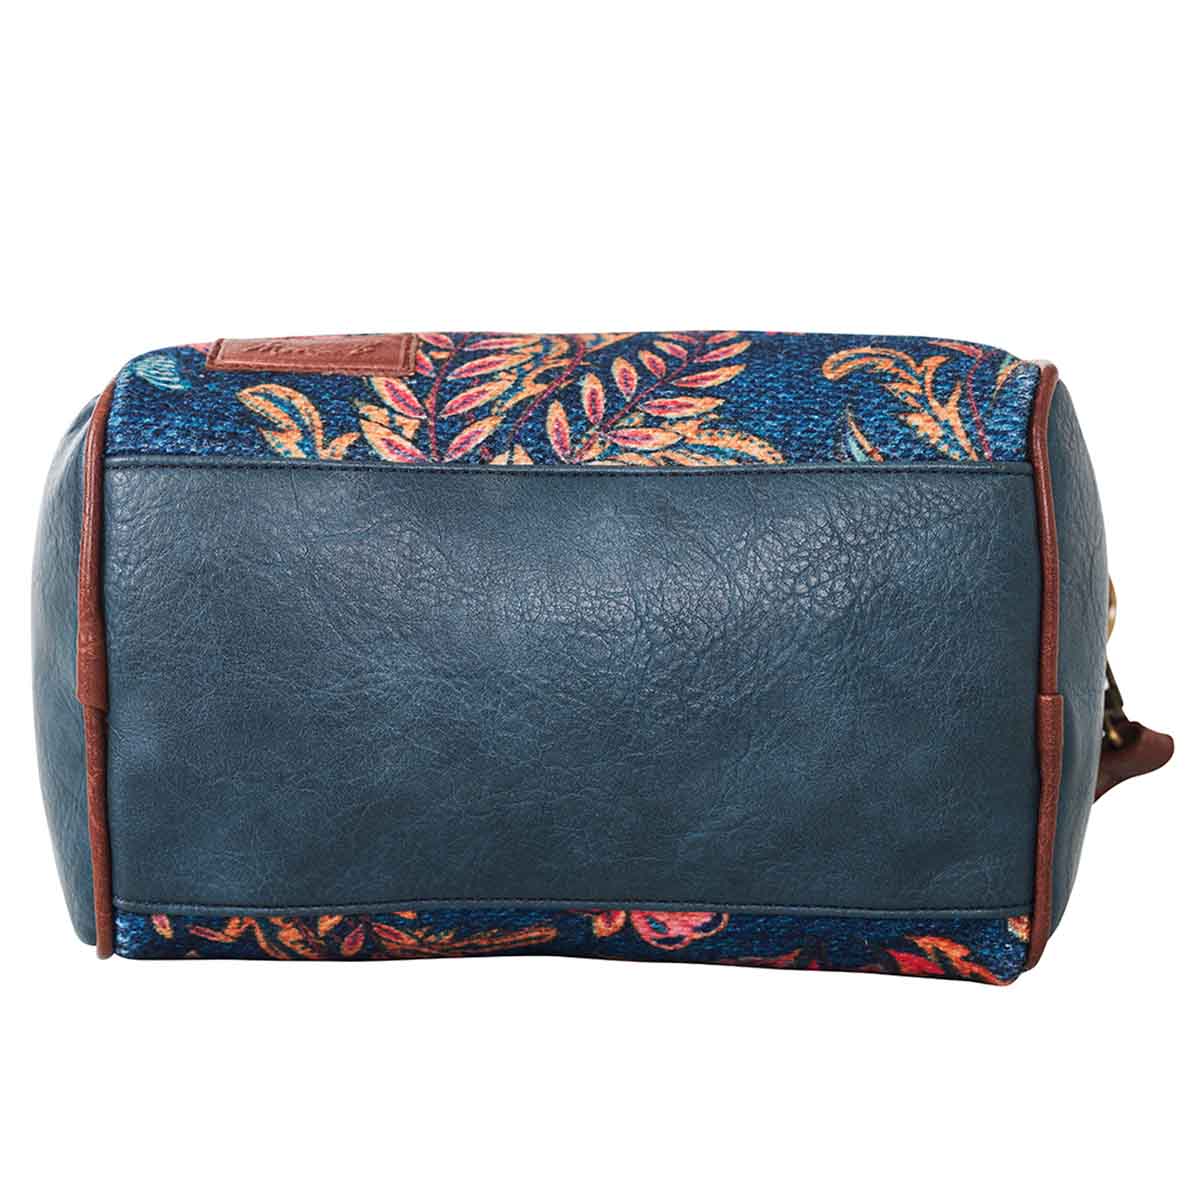 Mona B Canvas Small Vintage Handbag, Shoulder Bag, Crossbody Bag For Shopping, Travel With Stylish Design For Women (Blue, Kilim) - M-7004